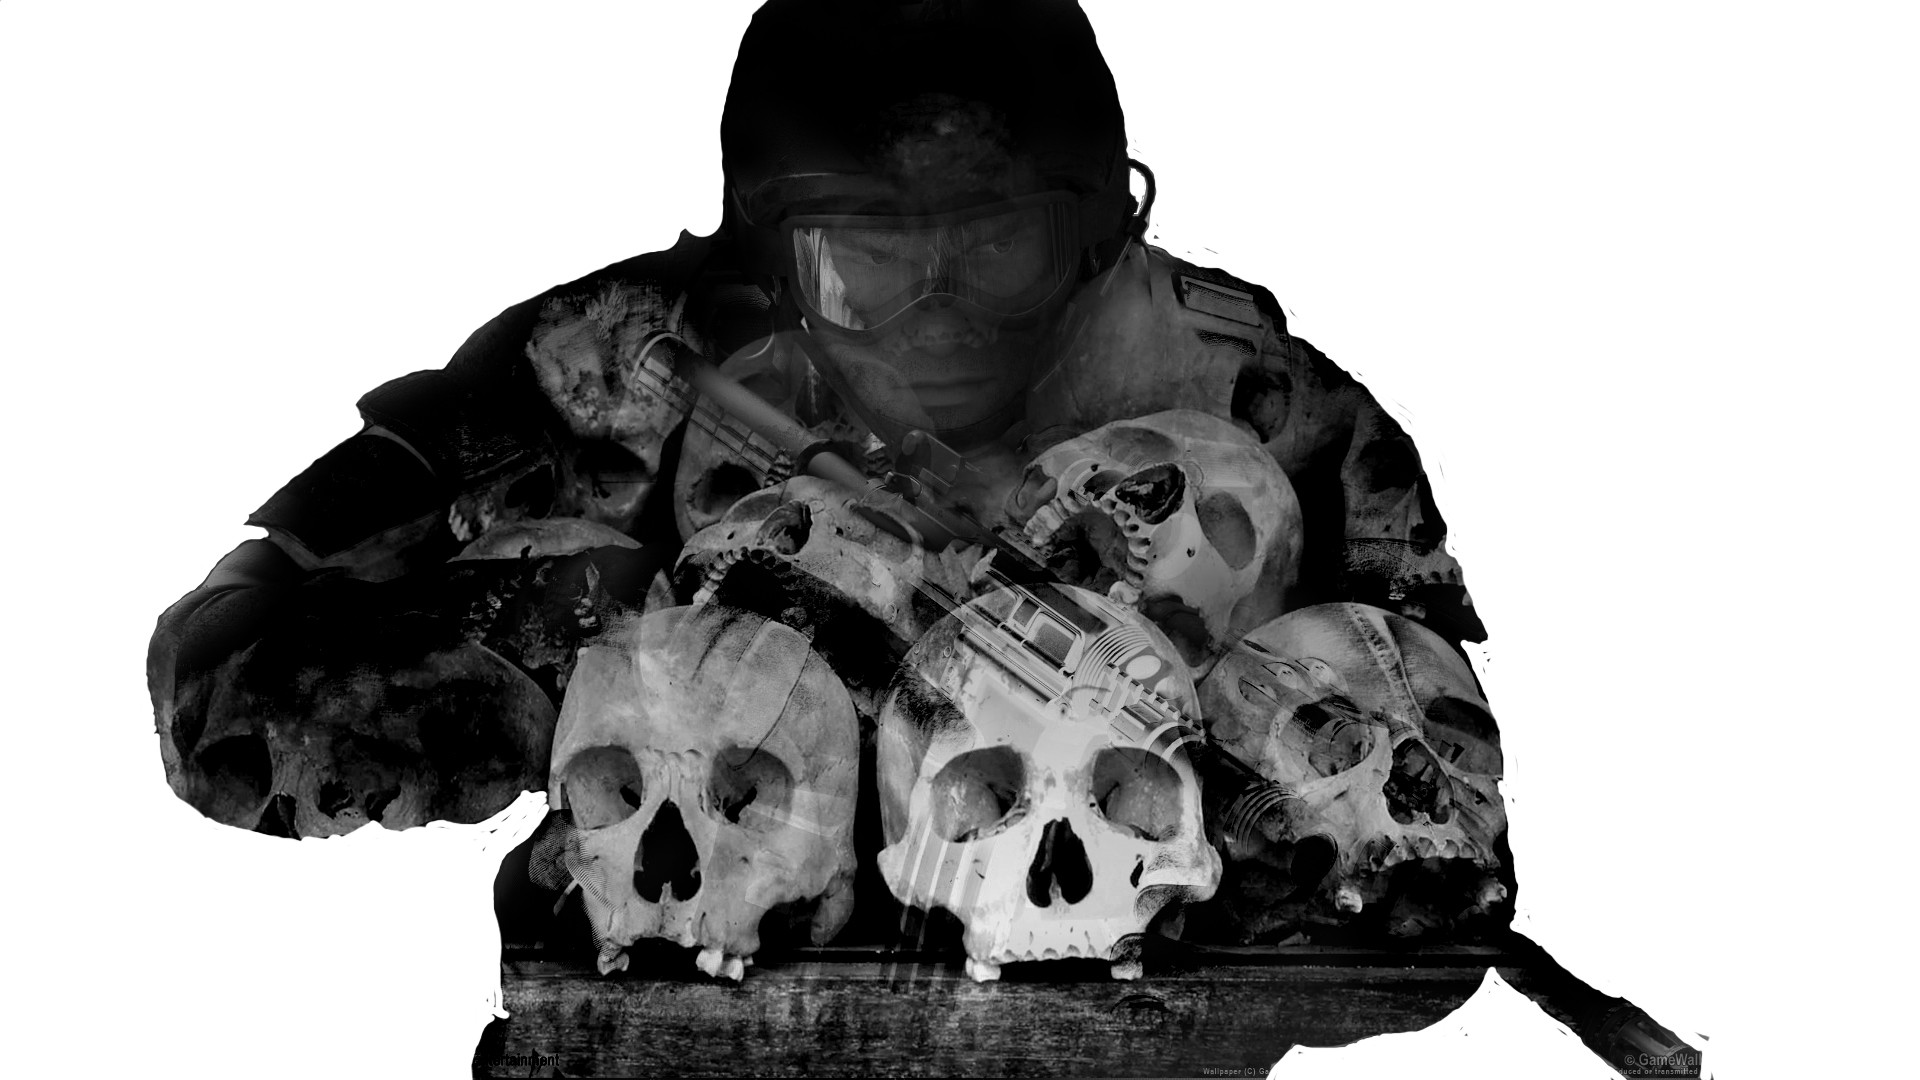 General 1920x1080 war soldier monochrome skull simple background weapon white background artwork